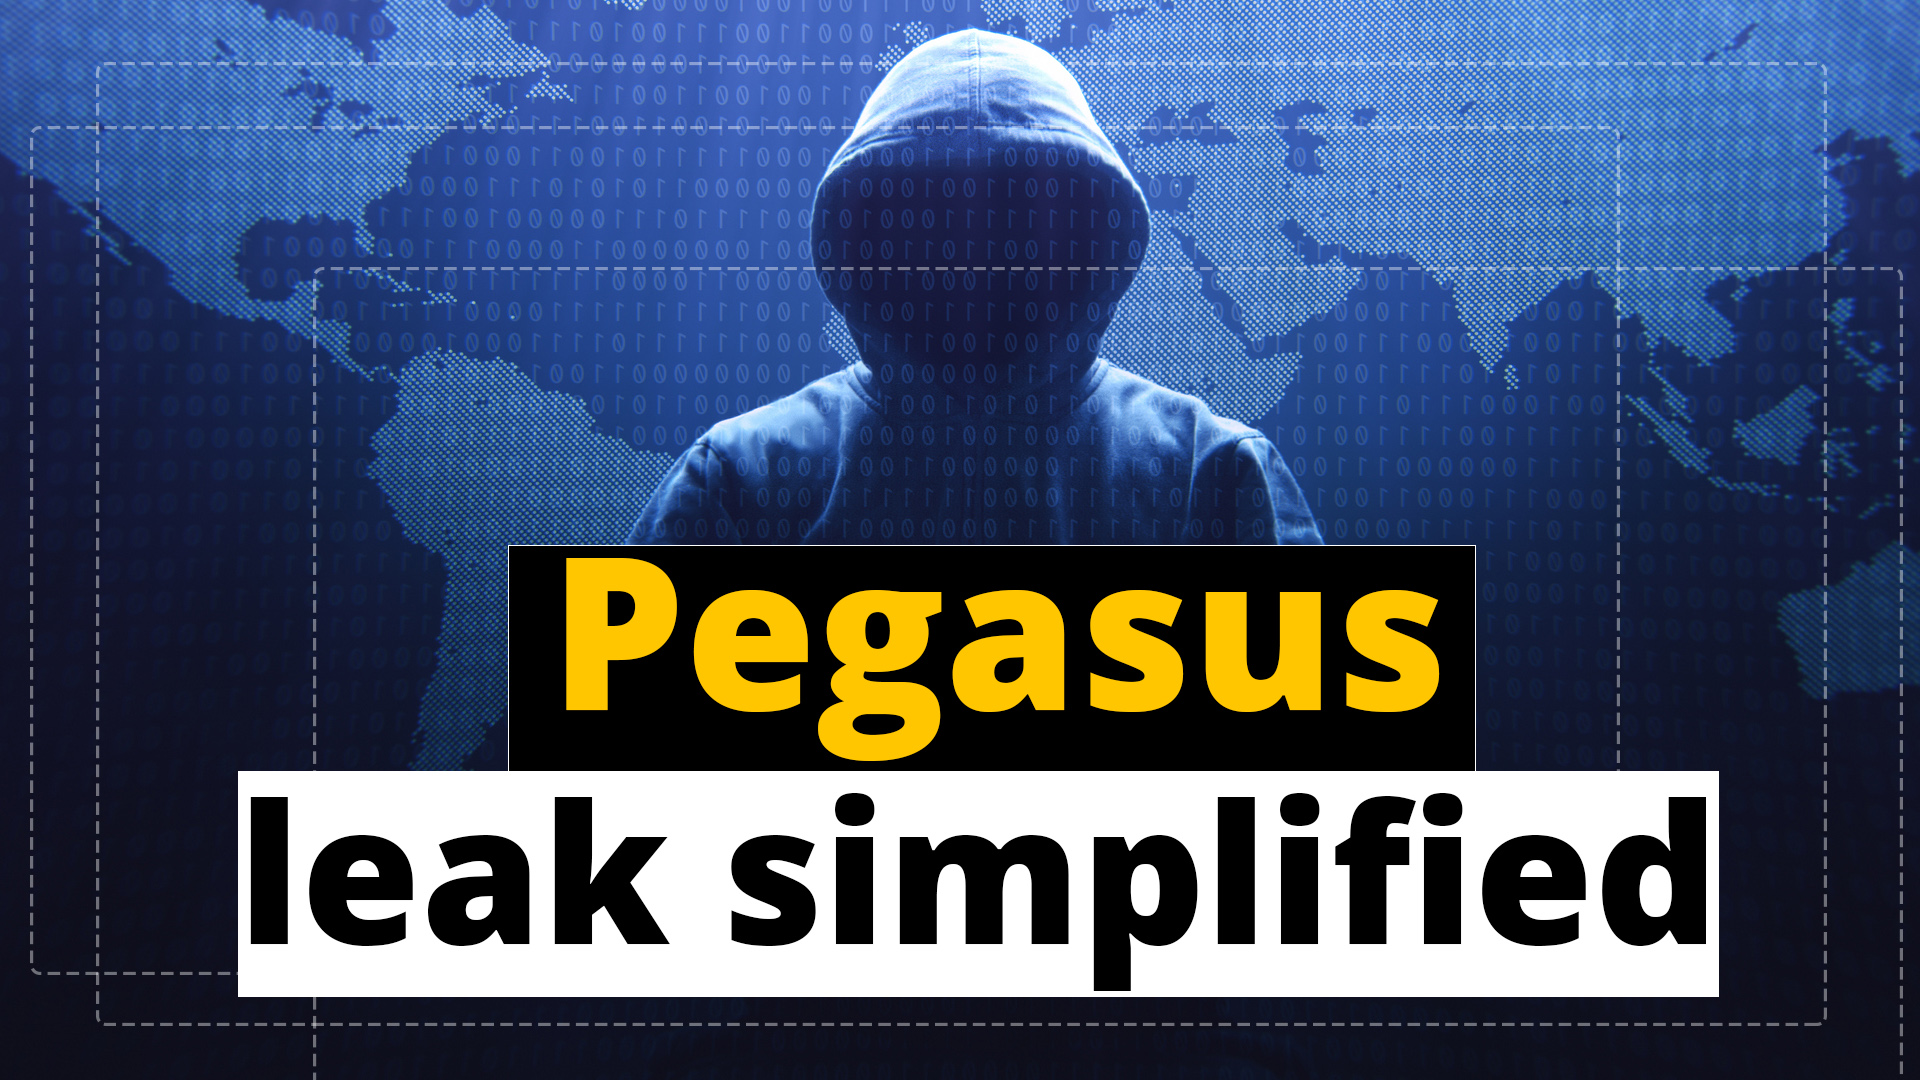 Explained for you: The Pegasus spyware data leak